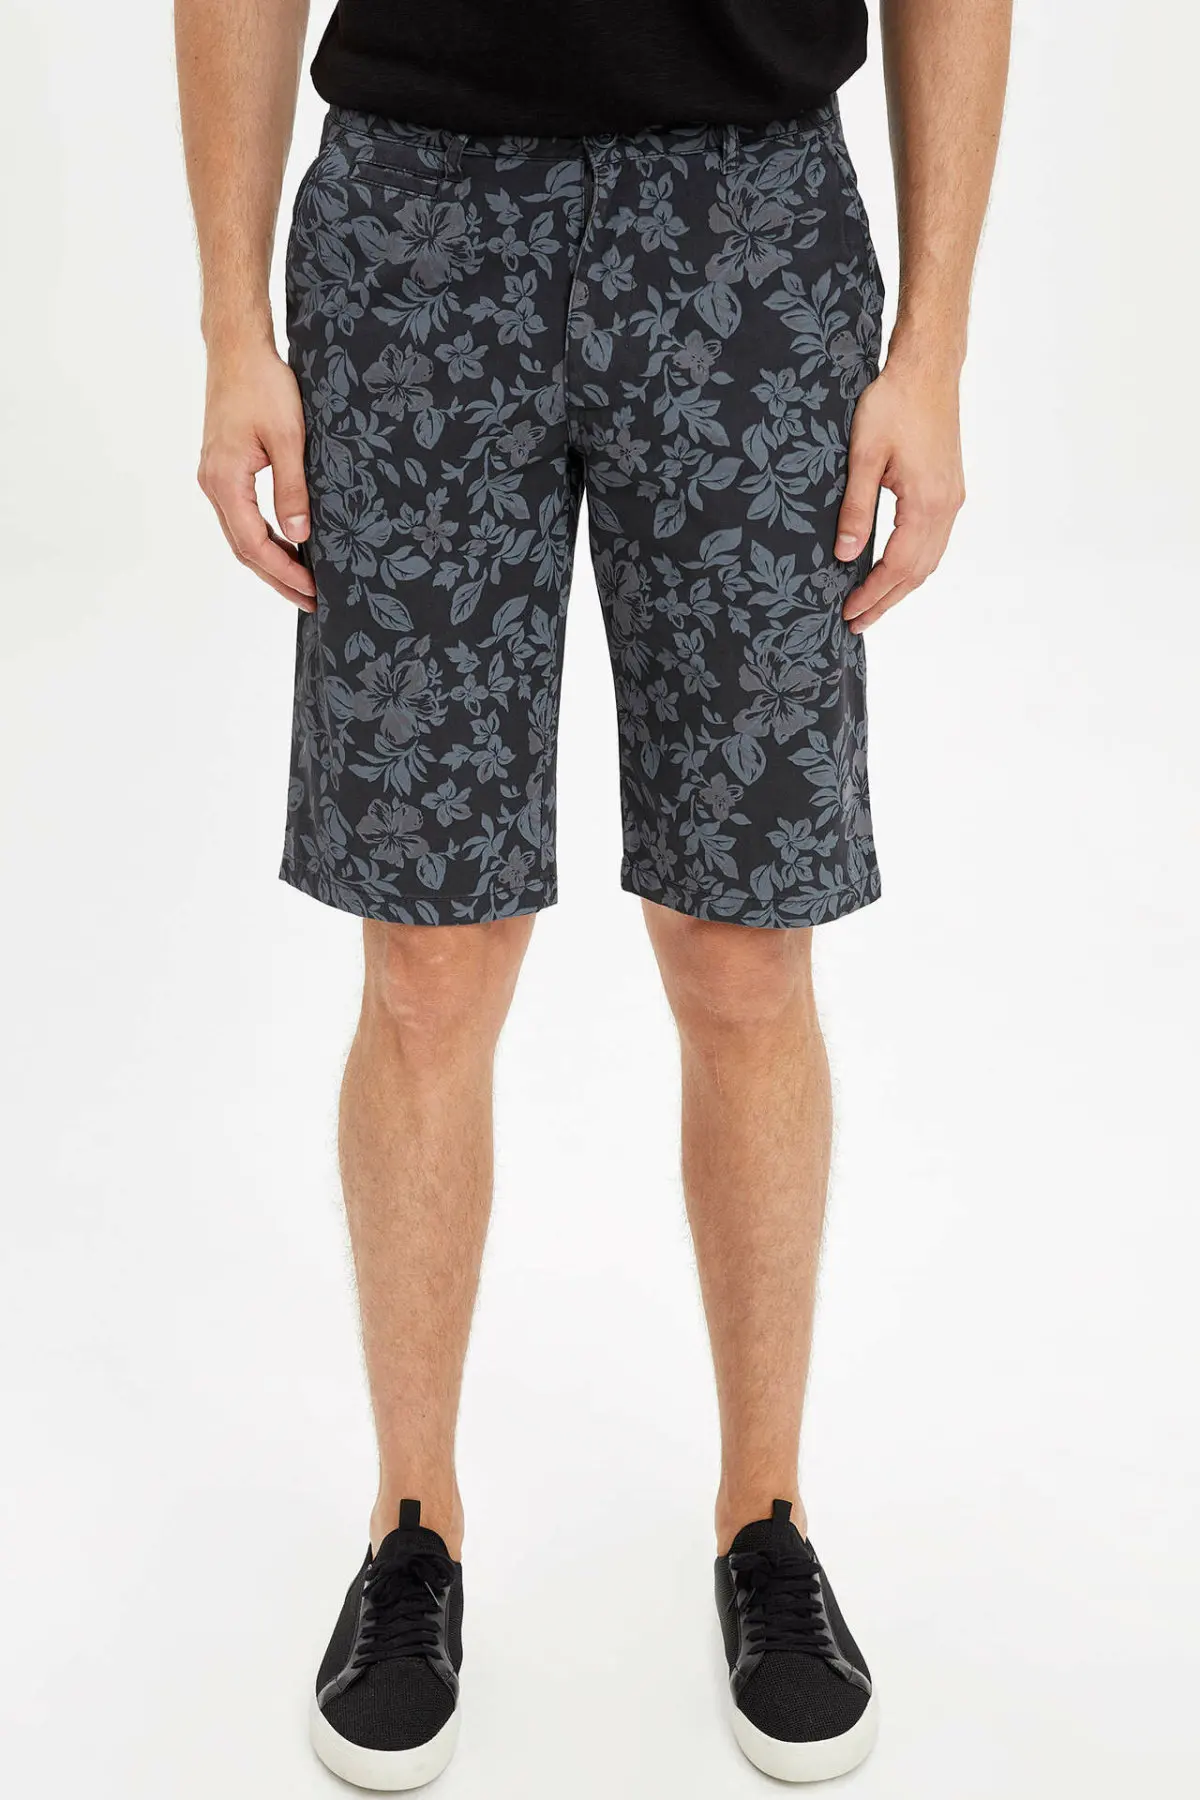 

DeFacto Man Summer Dark Color Shorts Men Mid-waist Casual Shorts Male Floral Prints Short Bottoms Bermuda-L6058AZ19SM